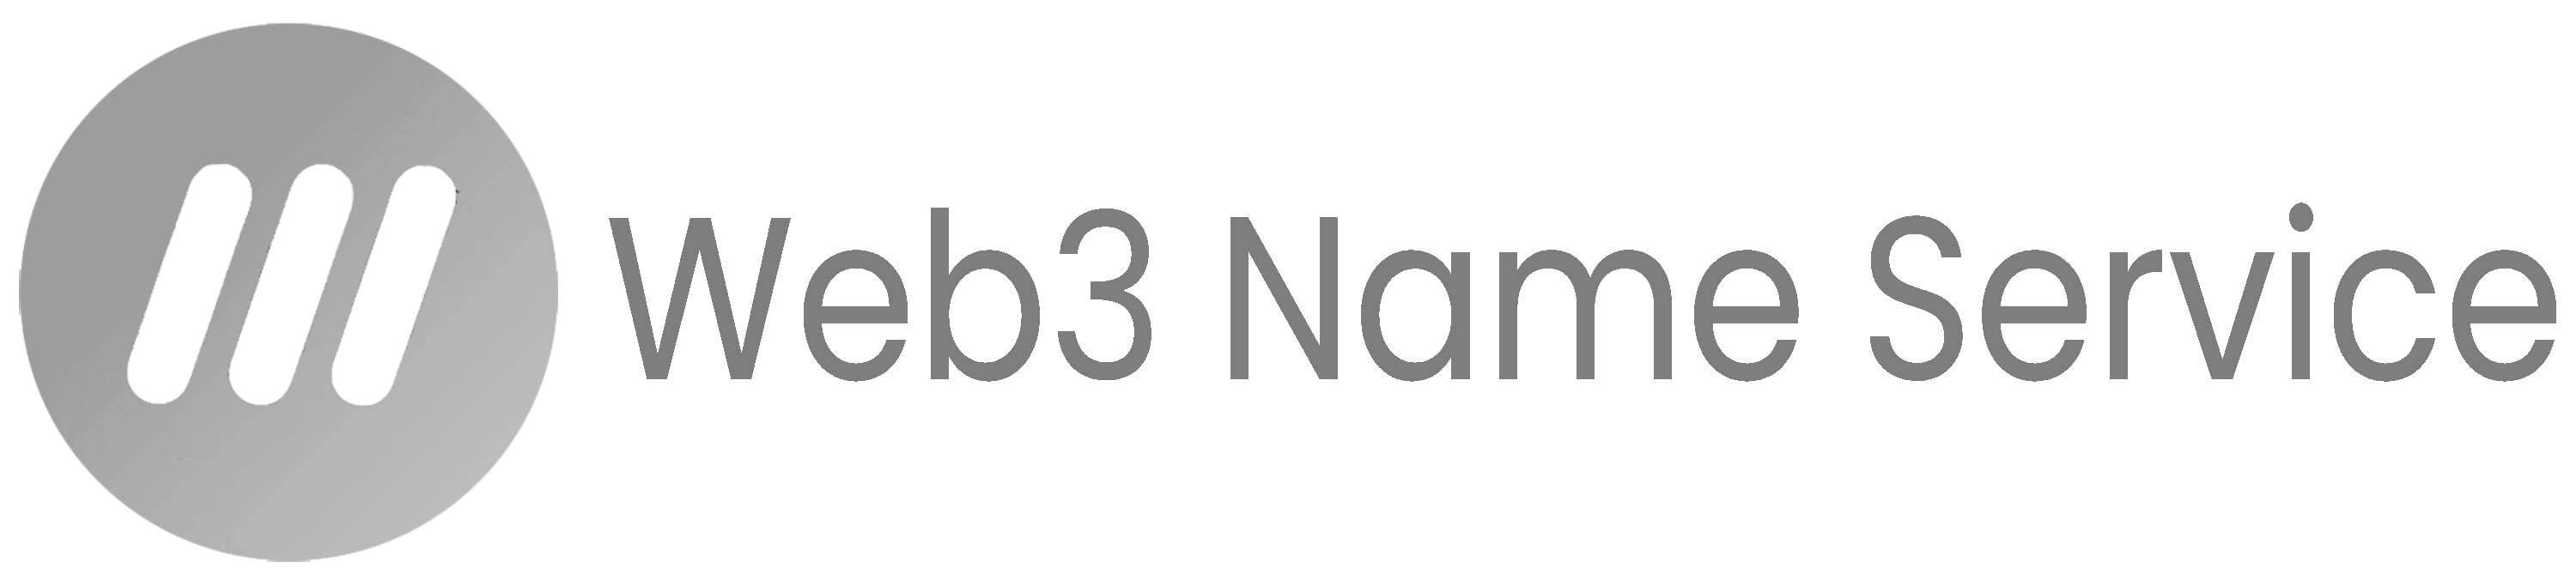 Web3 Name Service